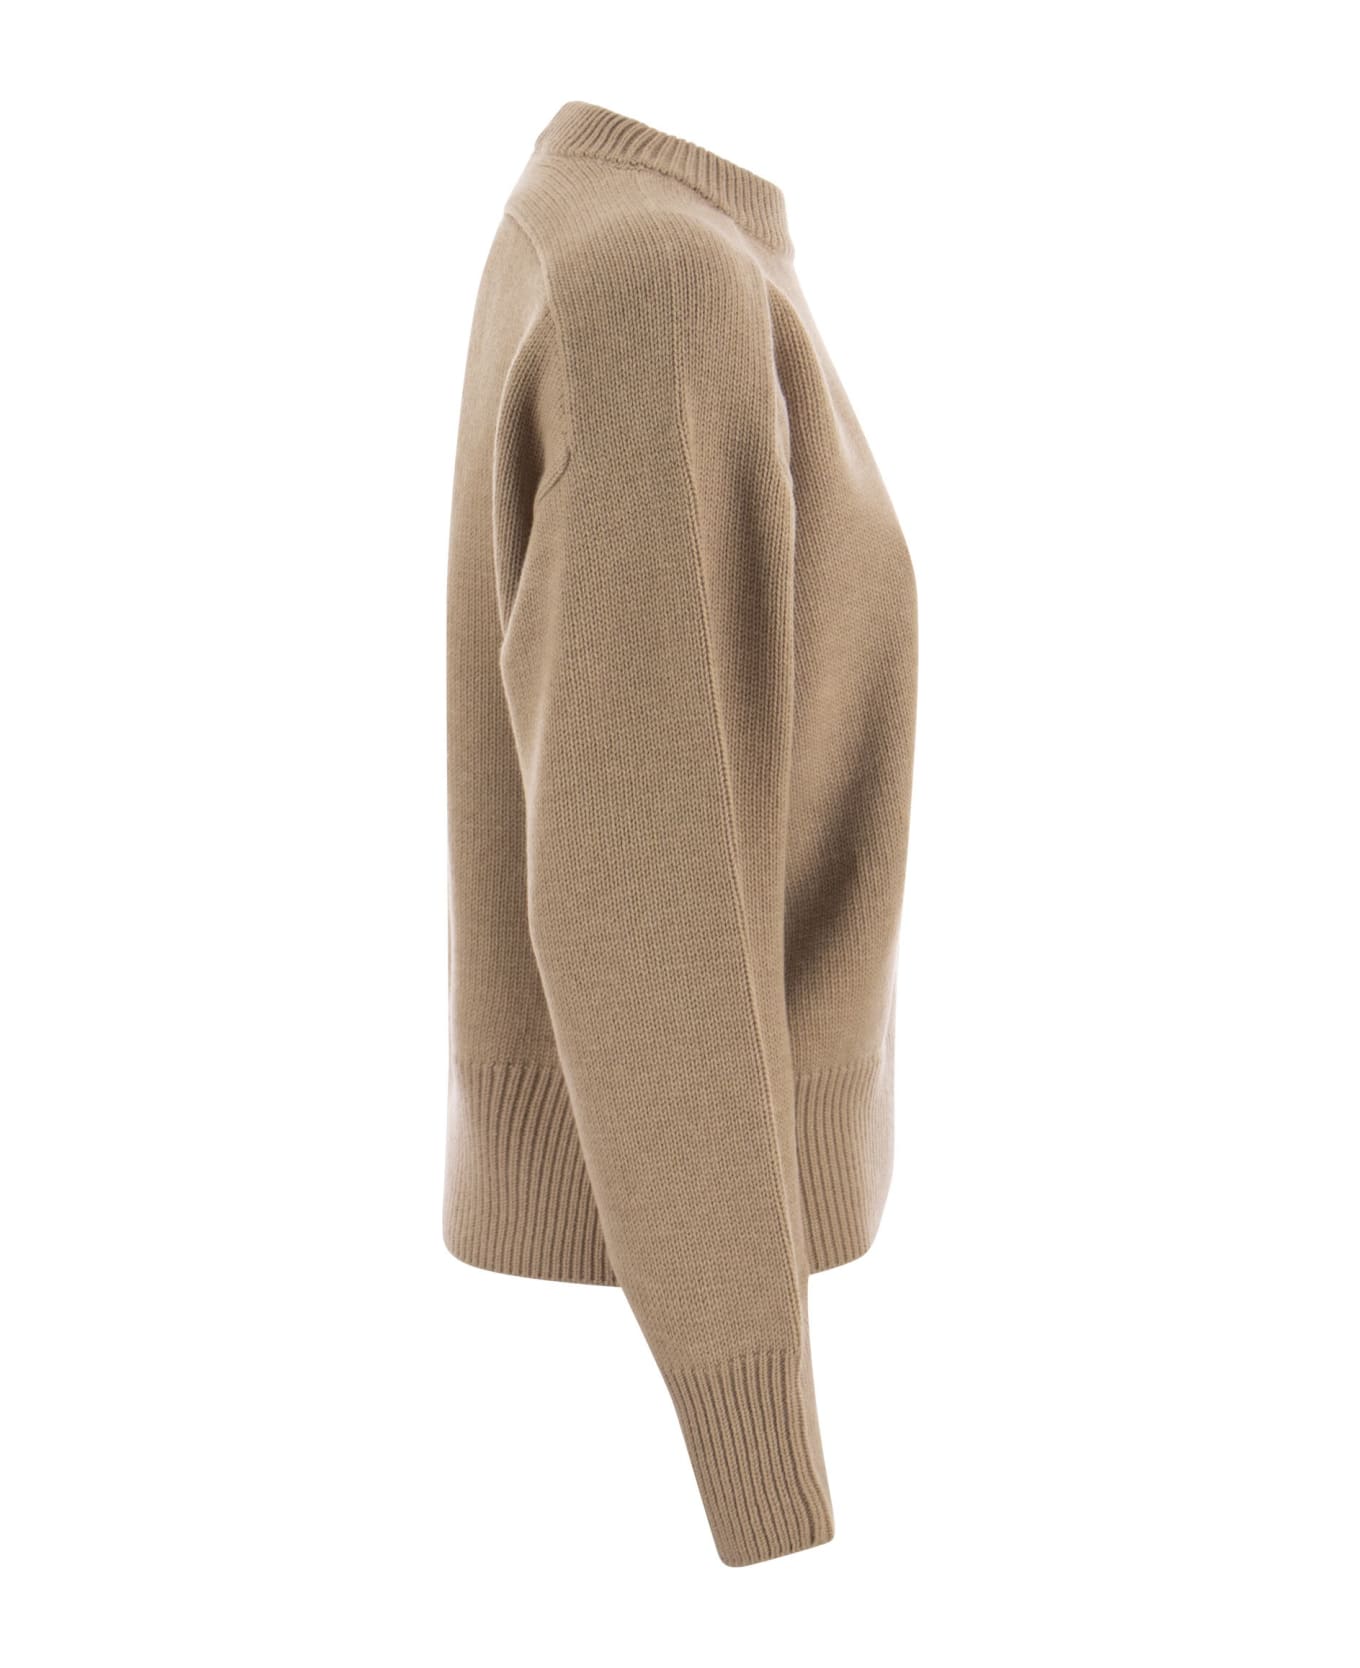 Canada Goose 'baysville' Beige Wool Sweater - Camel